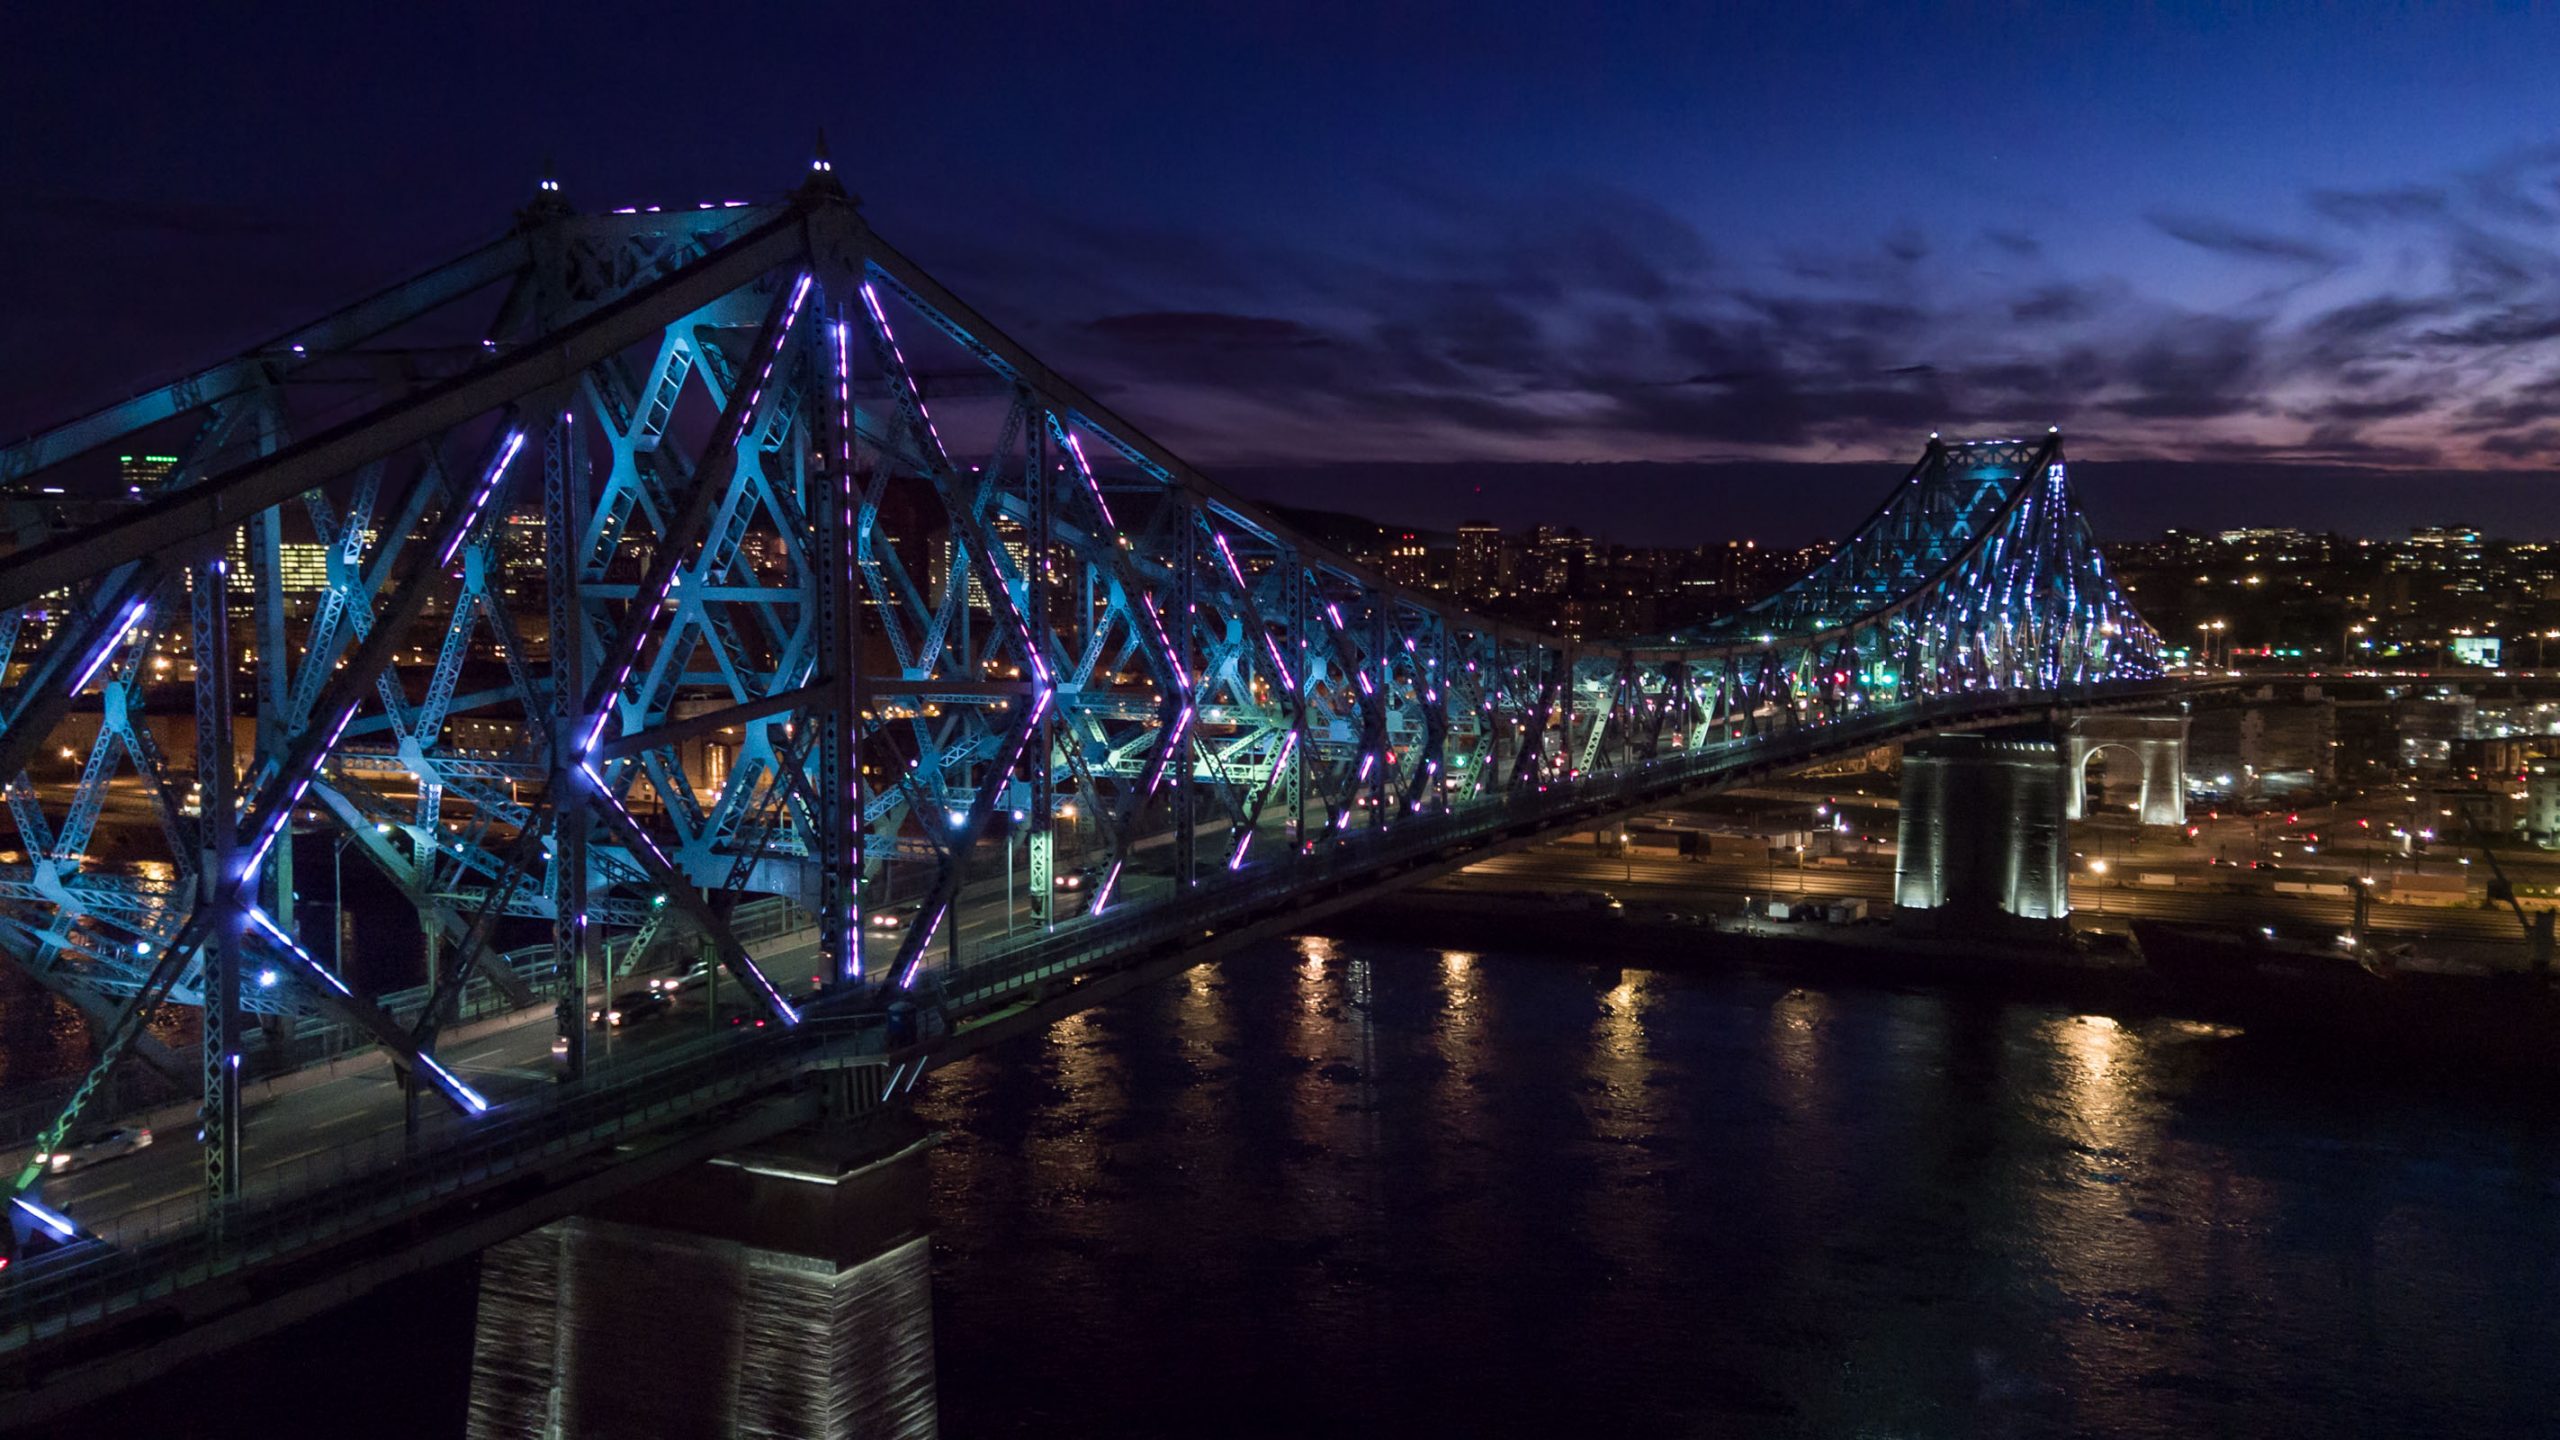 Jacques Cartier Bridge Interactive Illumination